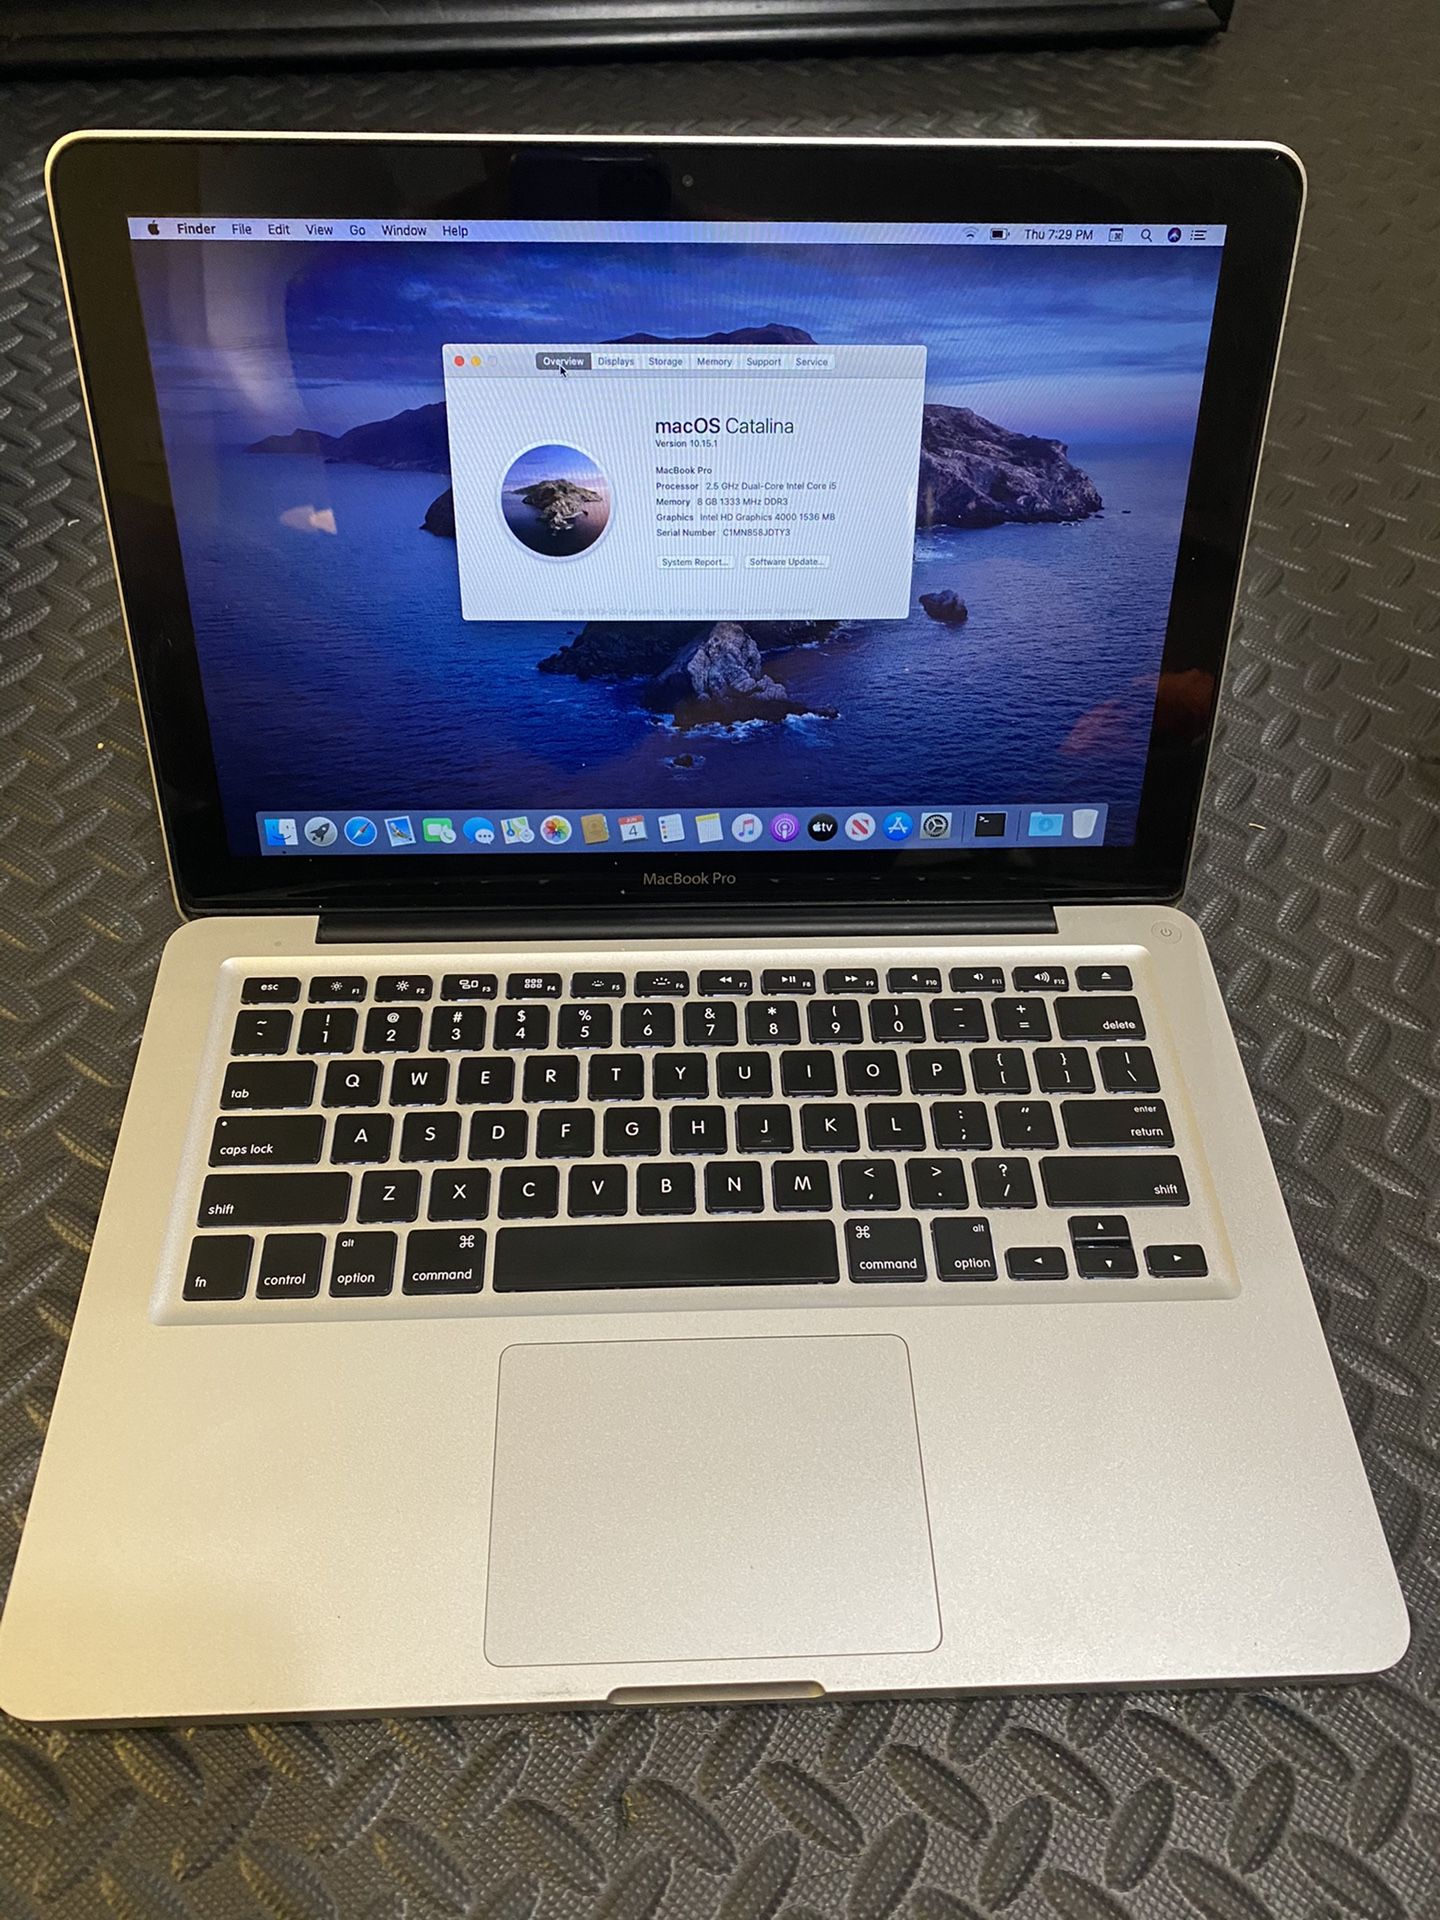 Apple MacBook Pro intel core i5 2.5ghz 8gbRam 500gb HardDrive year 2012